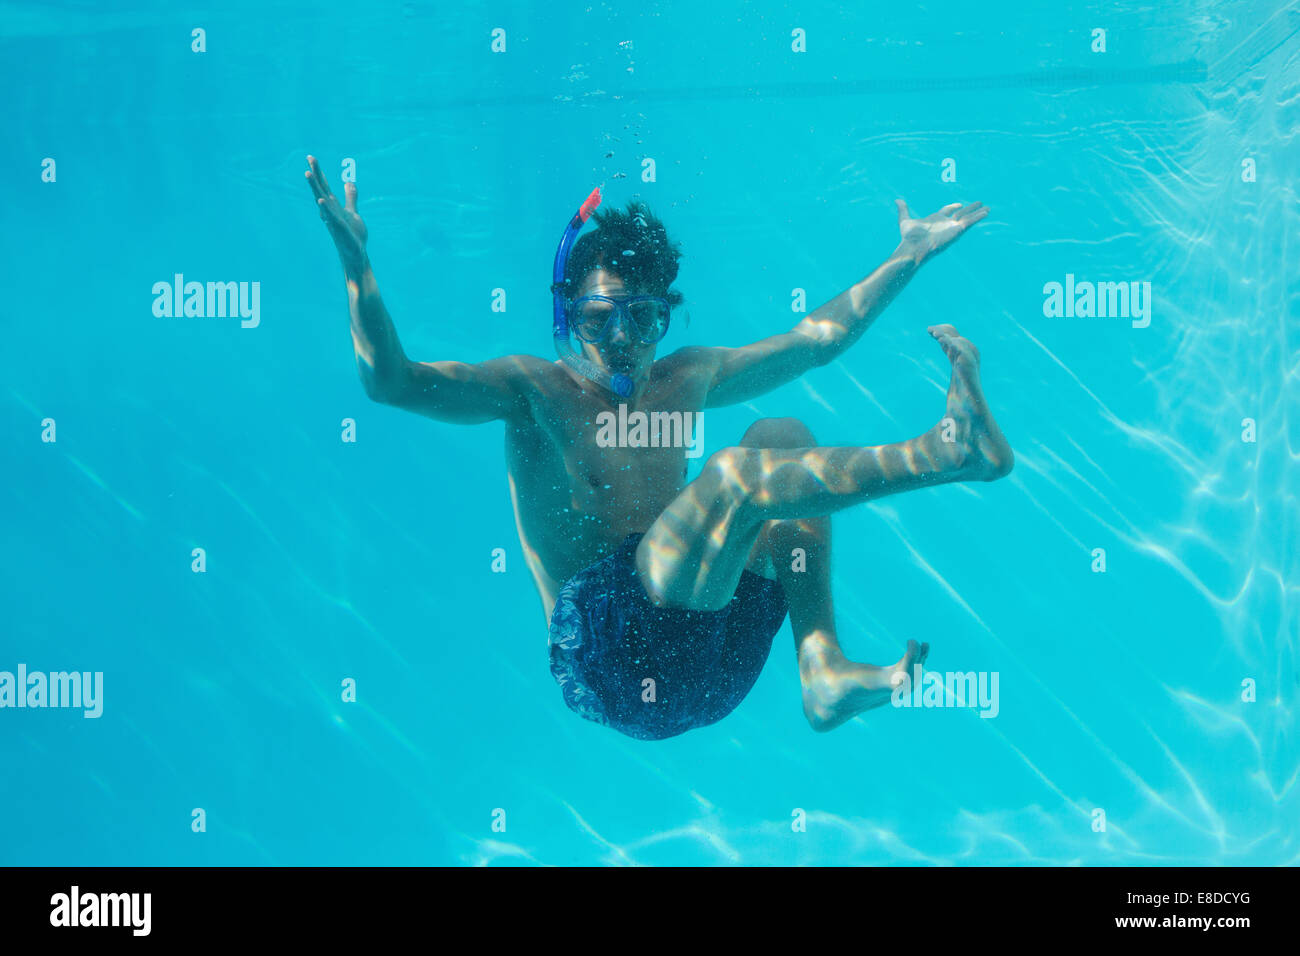 Young man wearing snorkel underwater Stock Photo